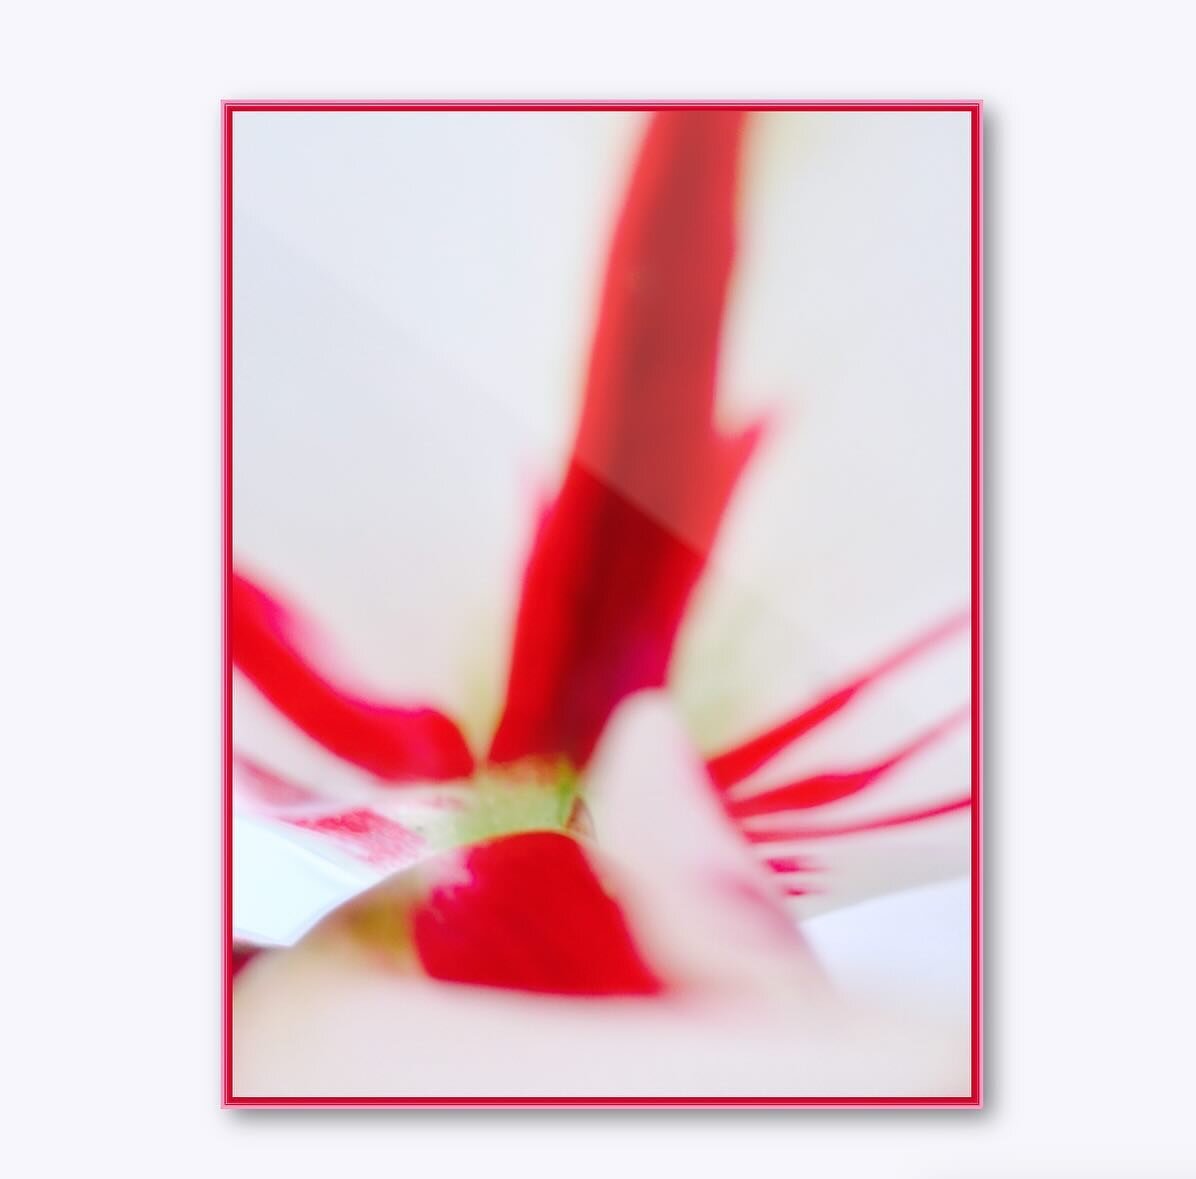 &lsquo;no title&lsquo; - photography

#tulips #tulip #photography #art #artphotography #arte #artist #breitfusseva #artcollector #artgallery #artlover #artcurator #artstudio #artcollective #artforyourhome #artforthehome #artforinteriors #artforthesou